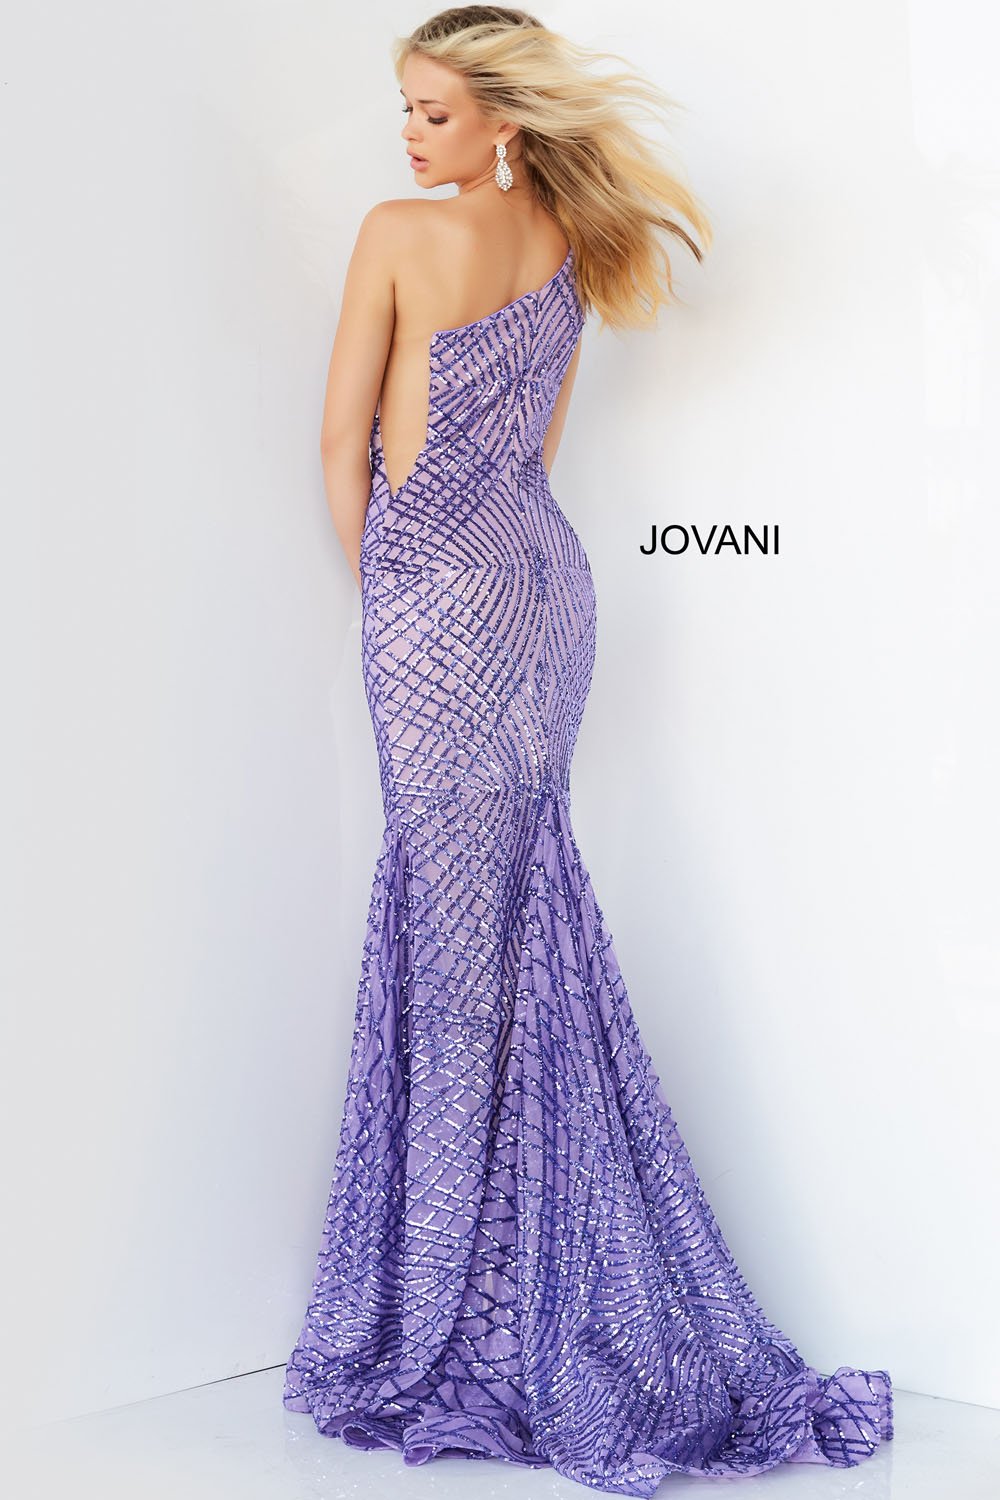 Jovani 06517 Lilac prom dresses images.